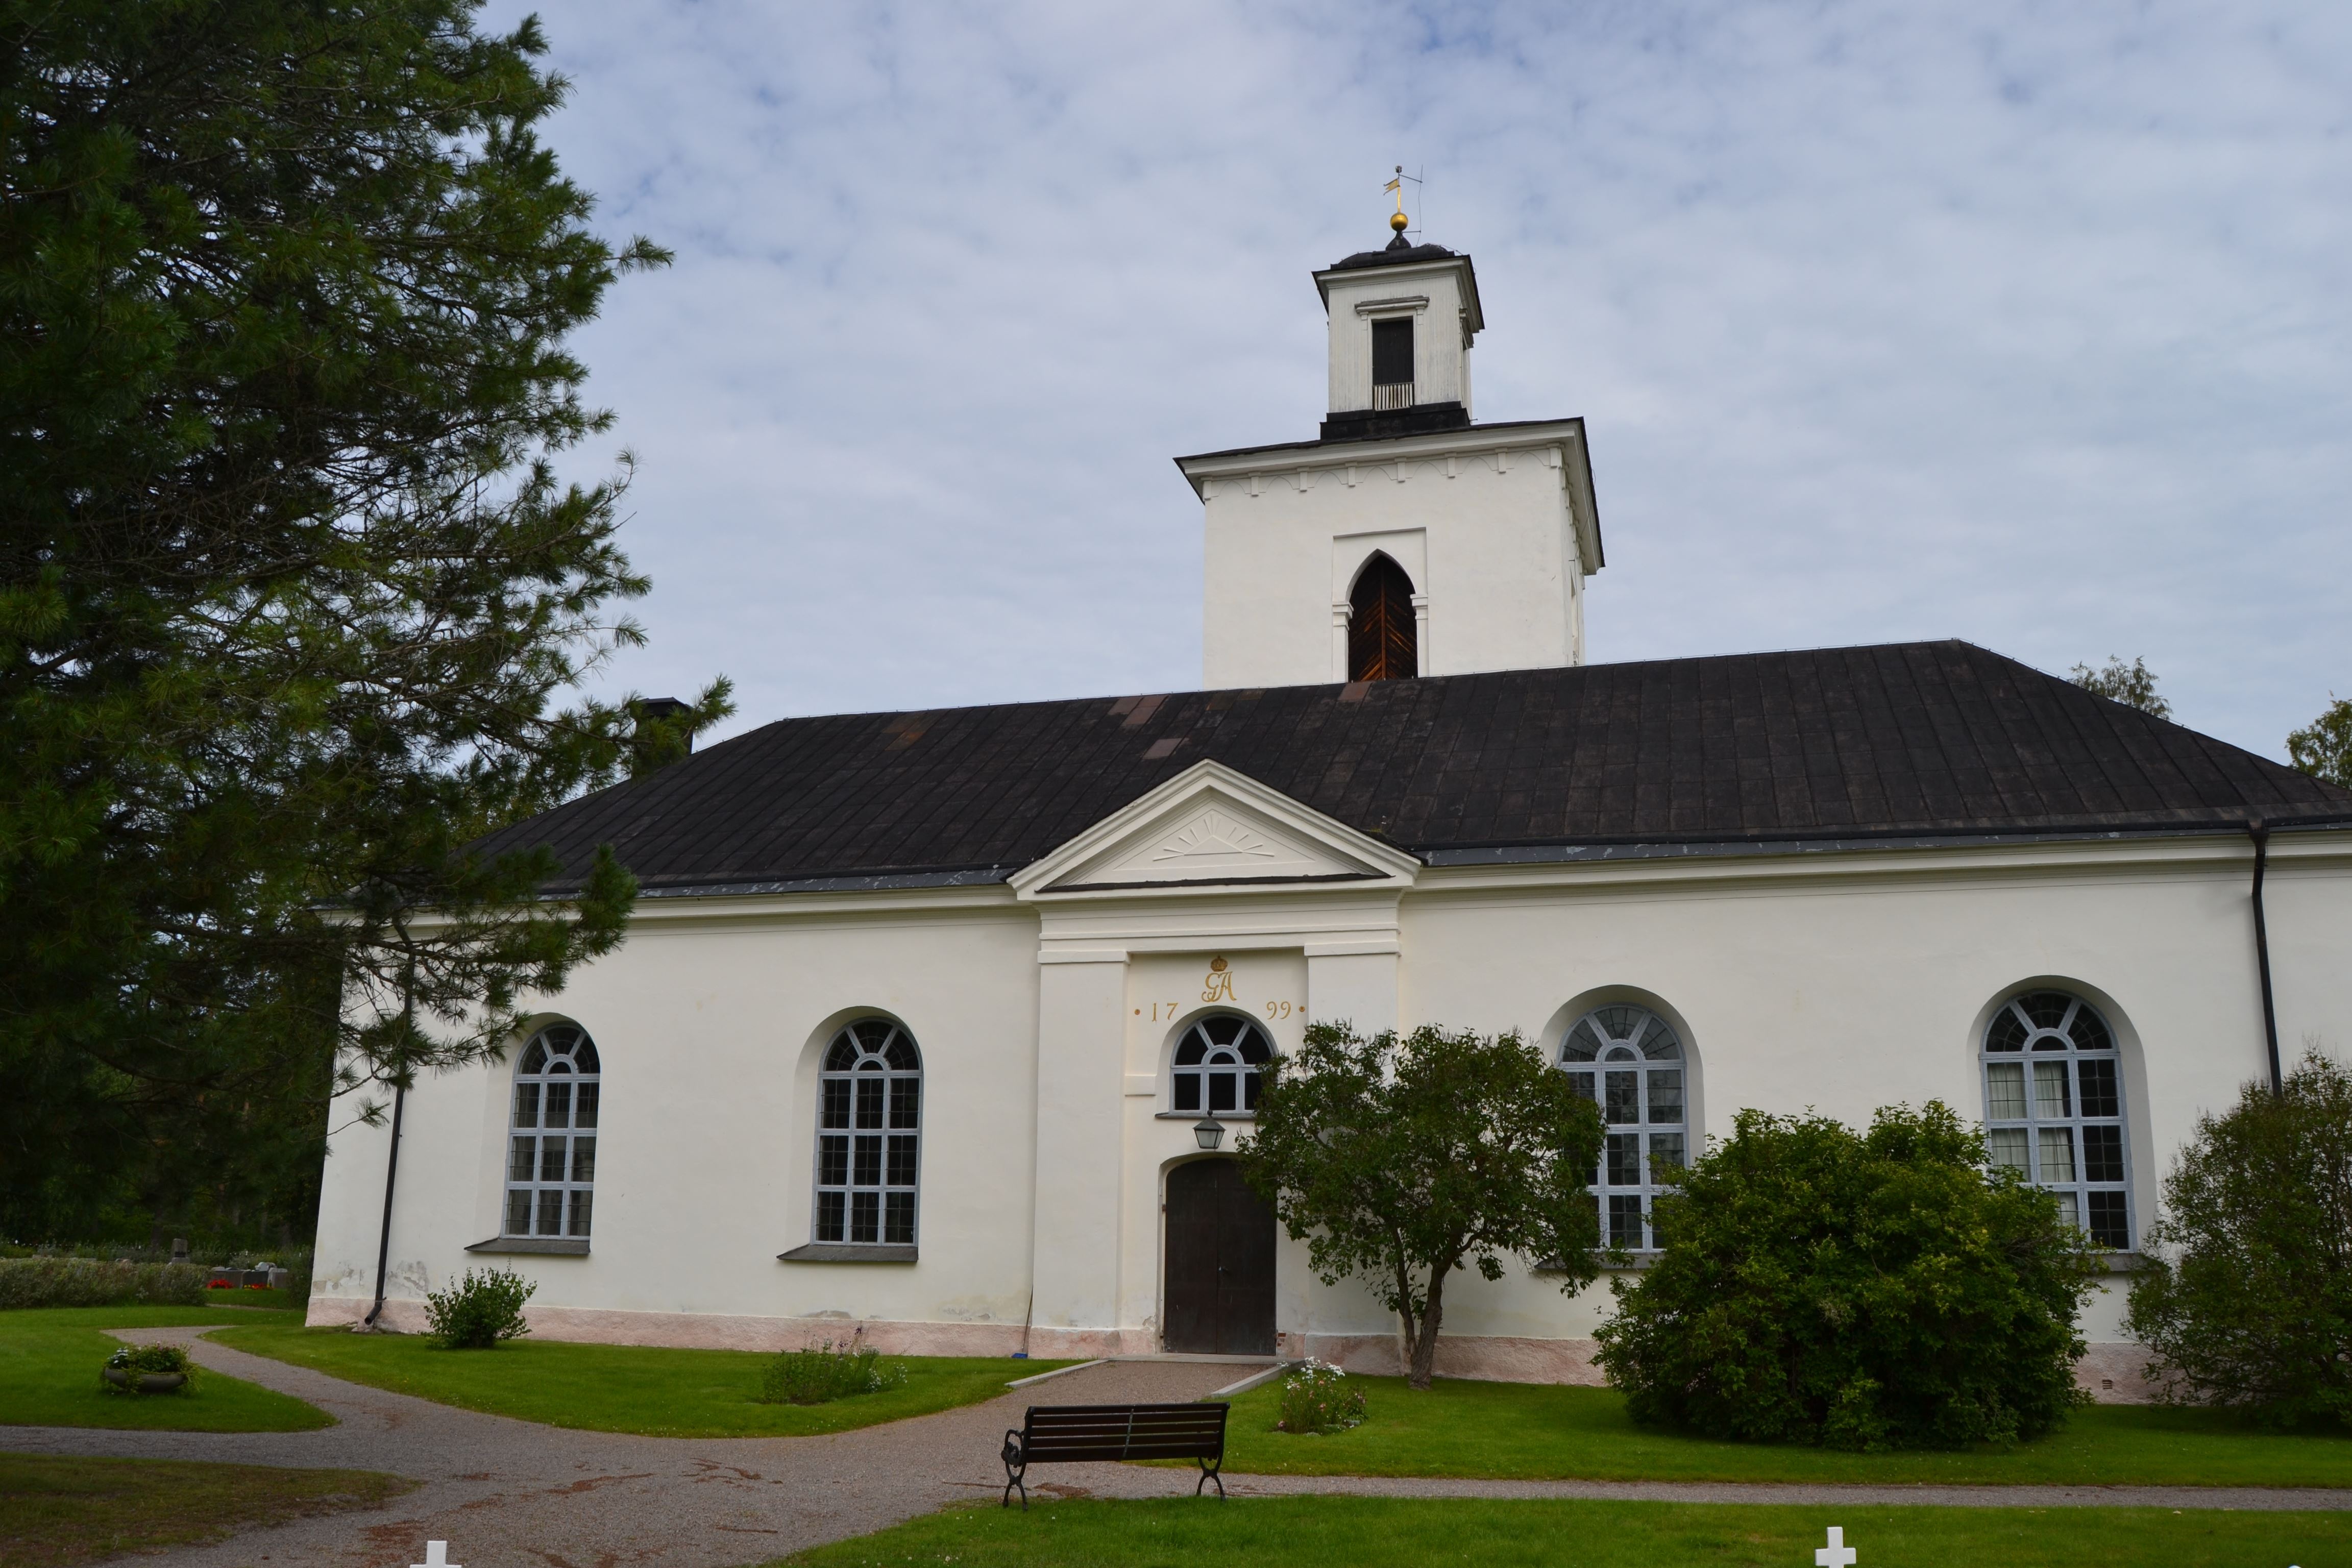 Norrbo church